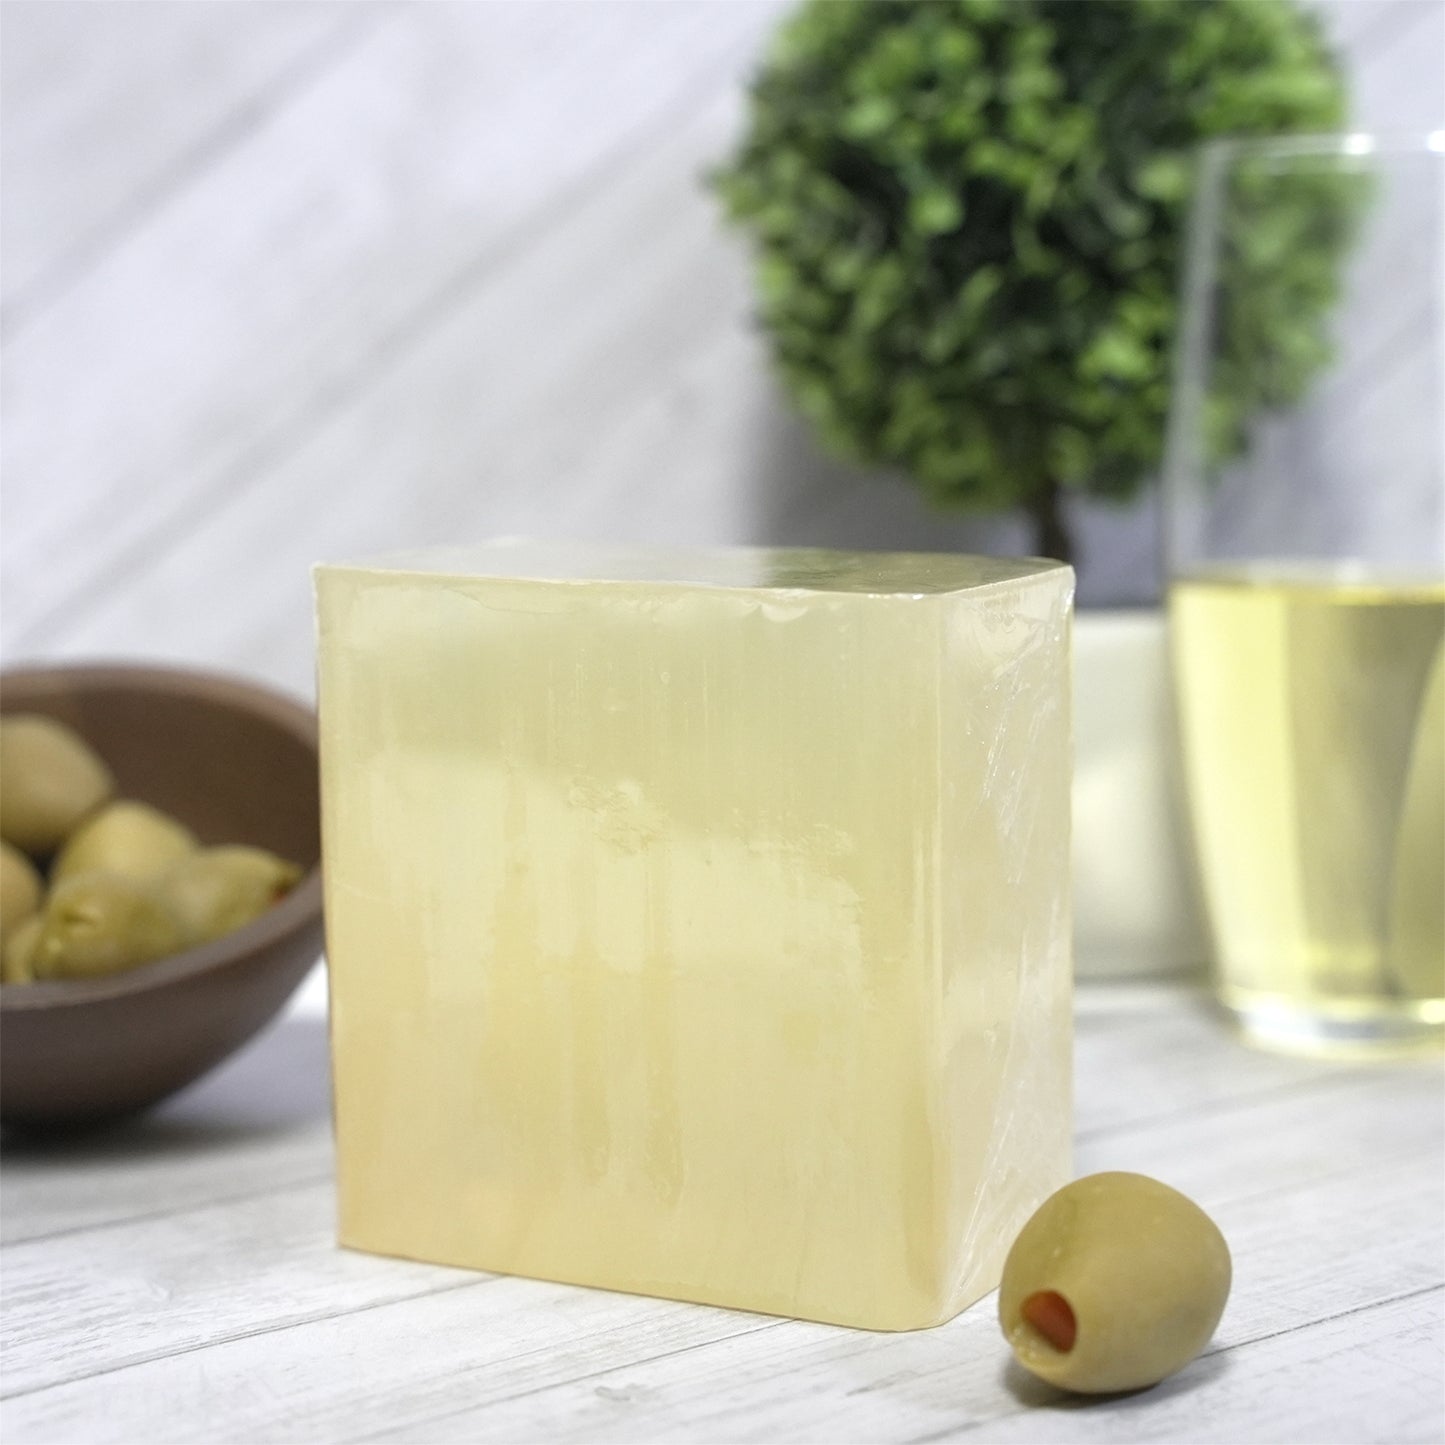 Olive Oil Melt & Pour Soap Base